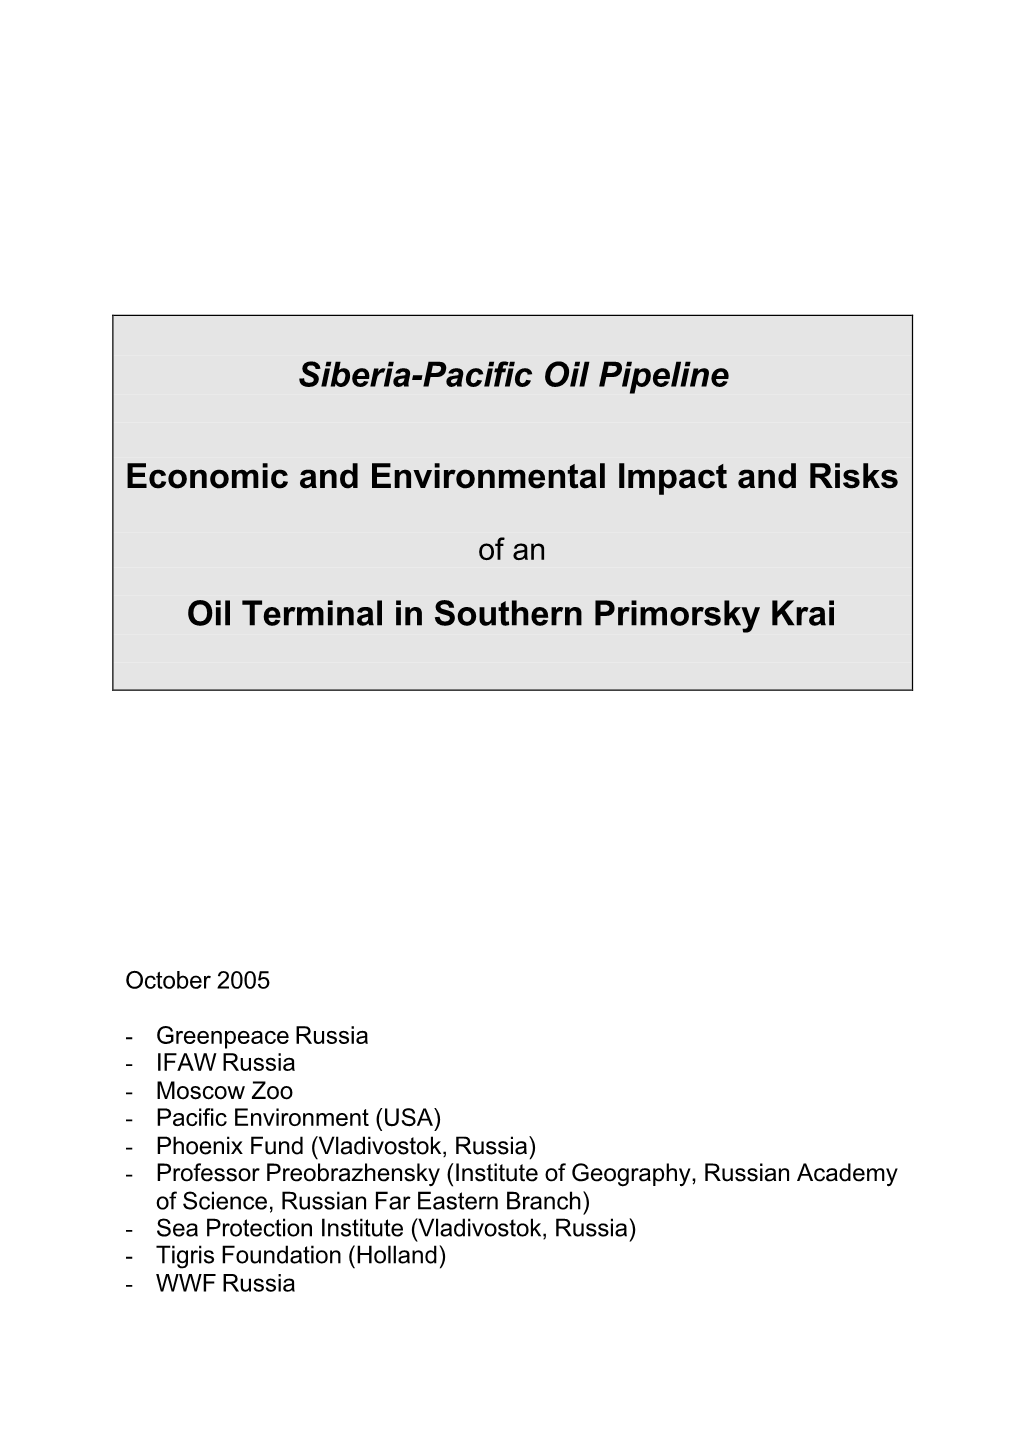 English Pipeline Report 23-October